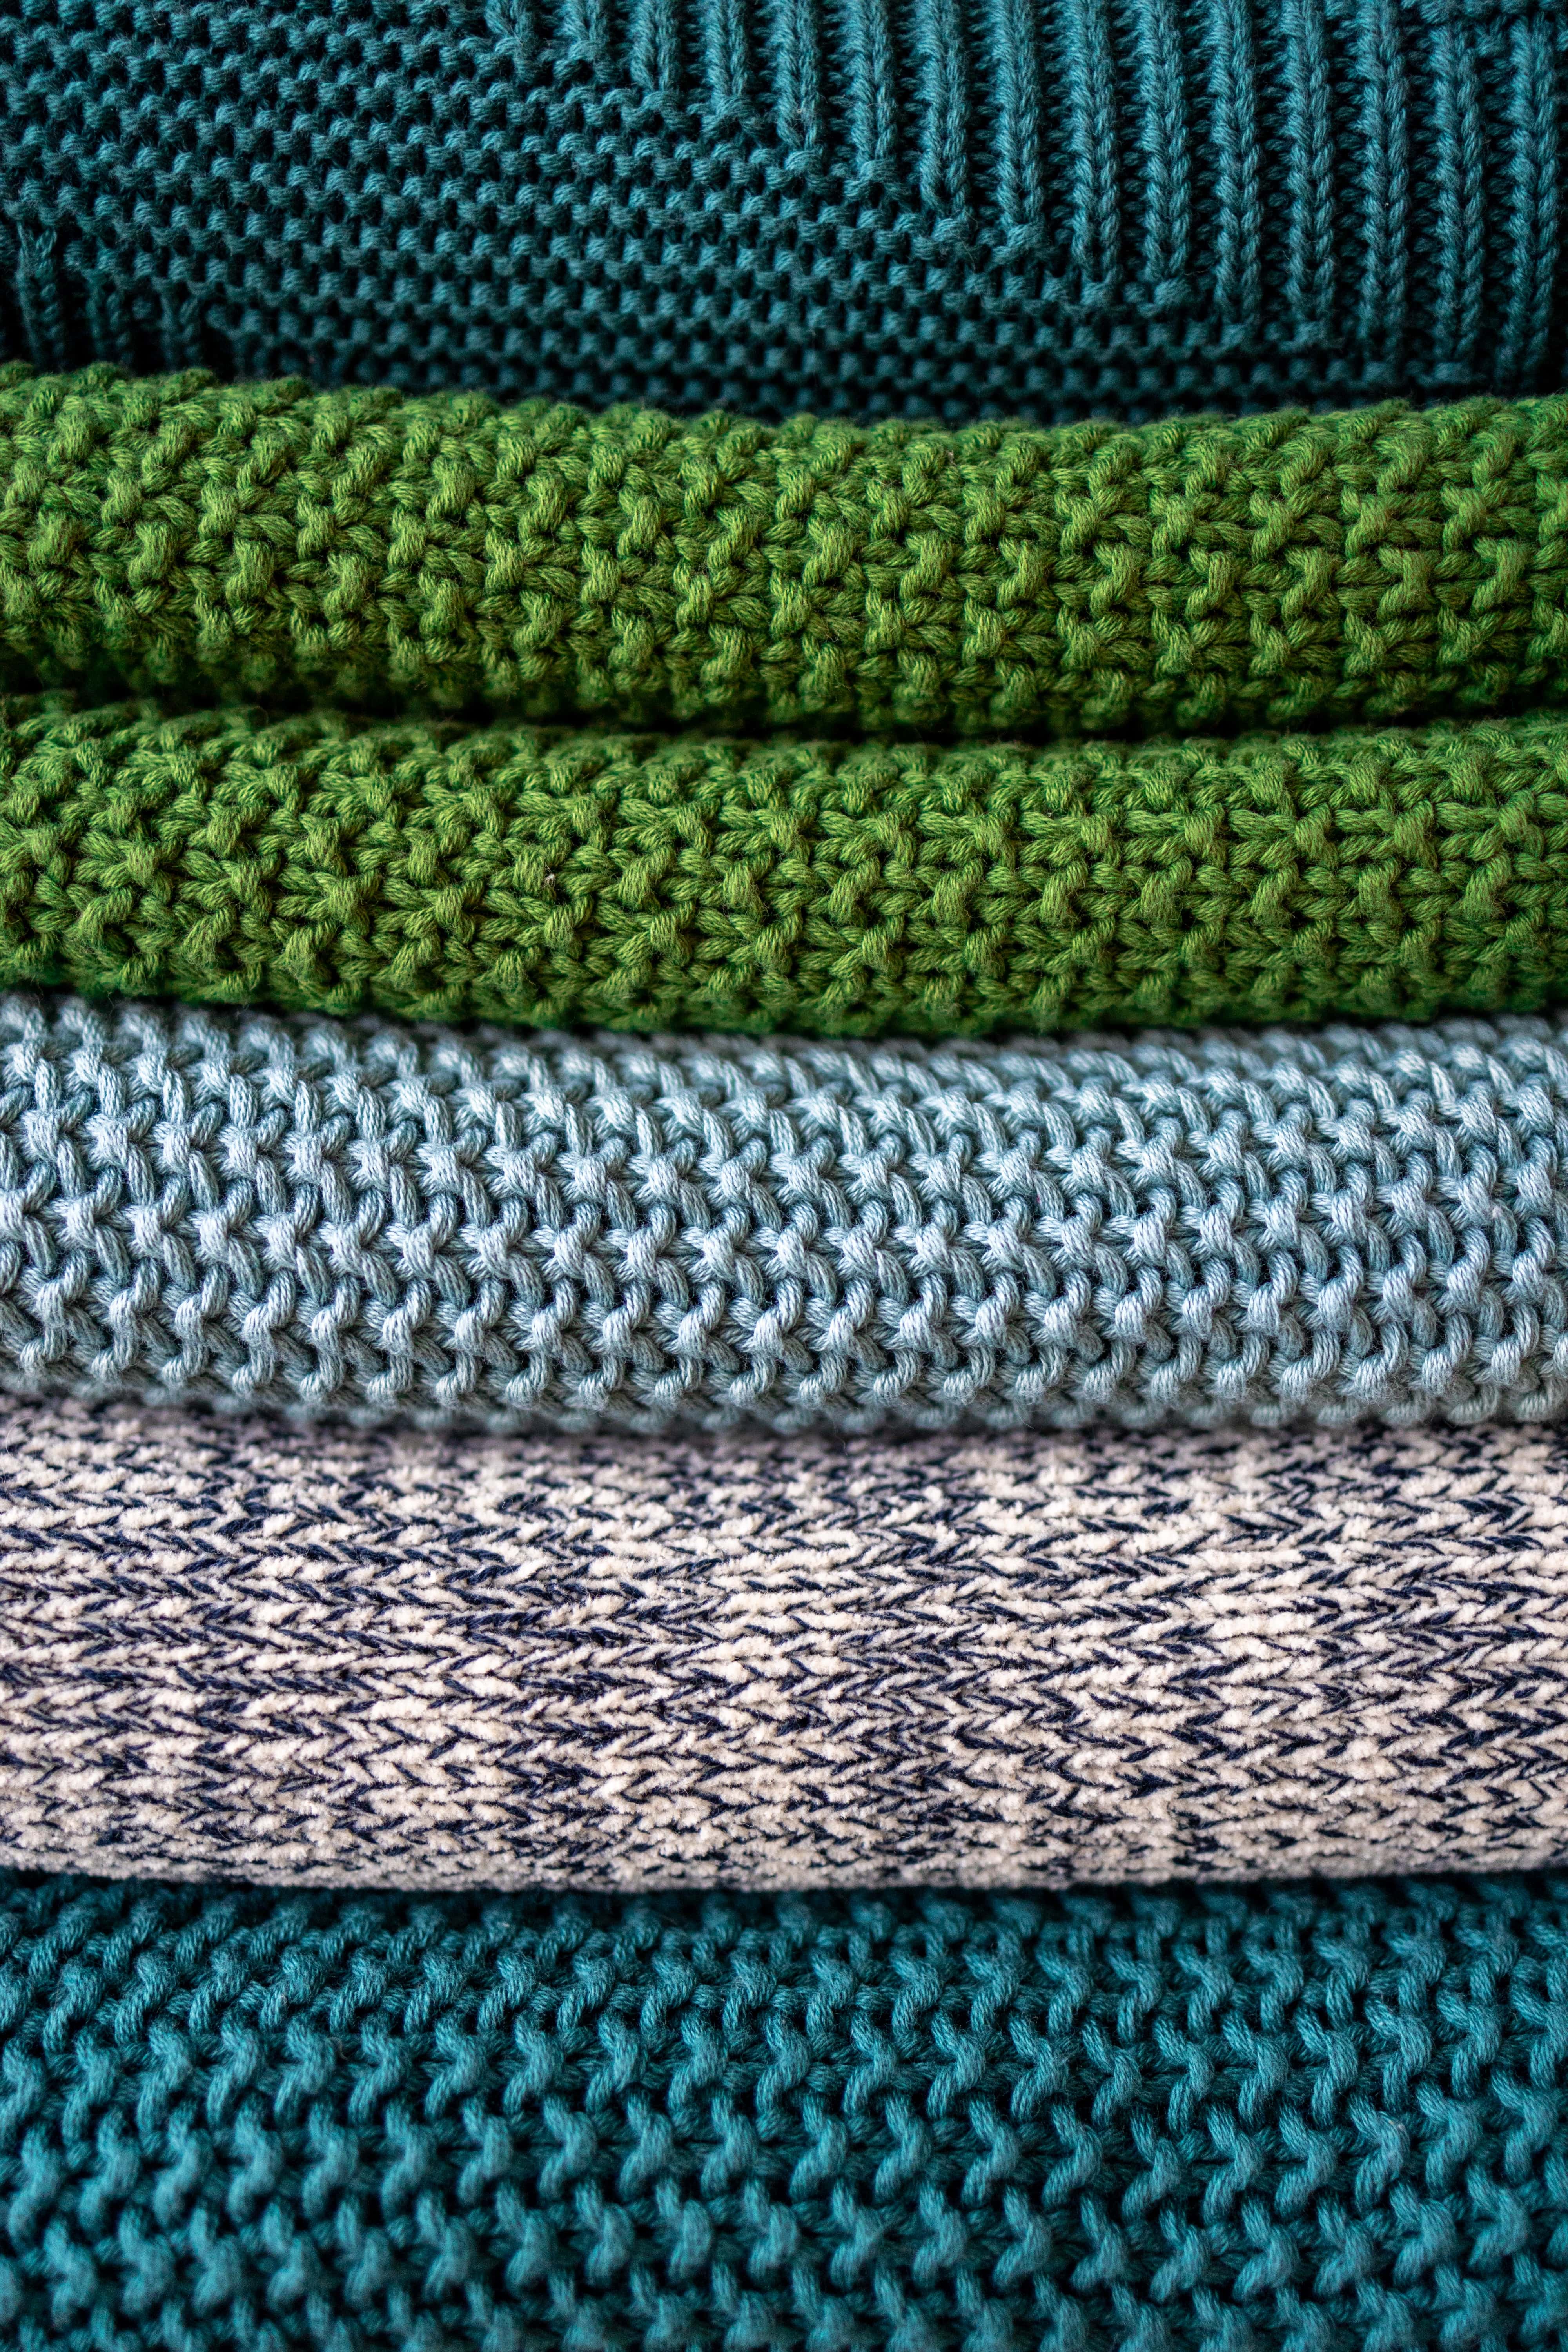 Knitted vs woven fabrics at Knipidee International